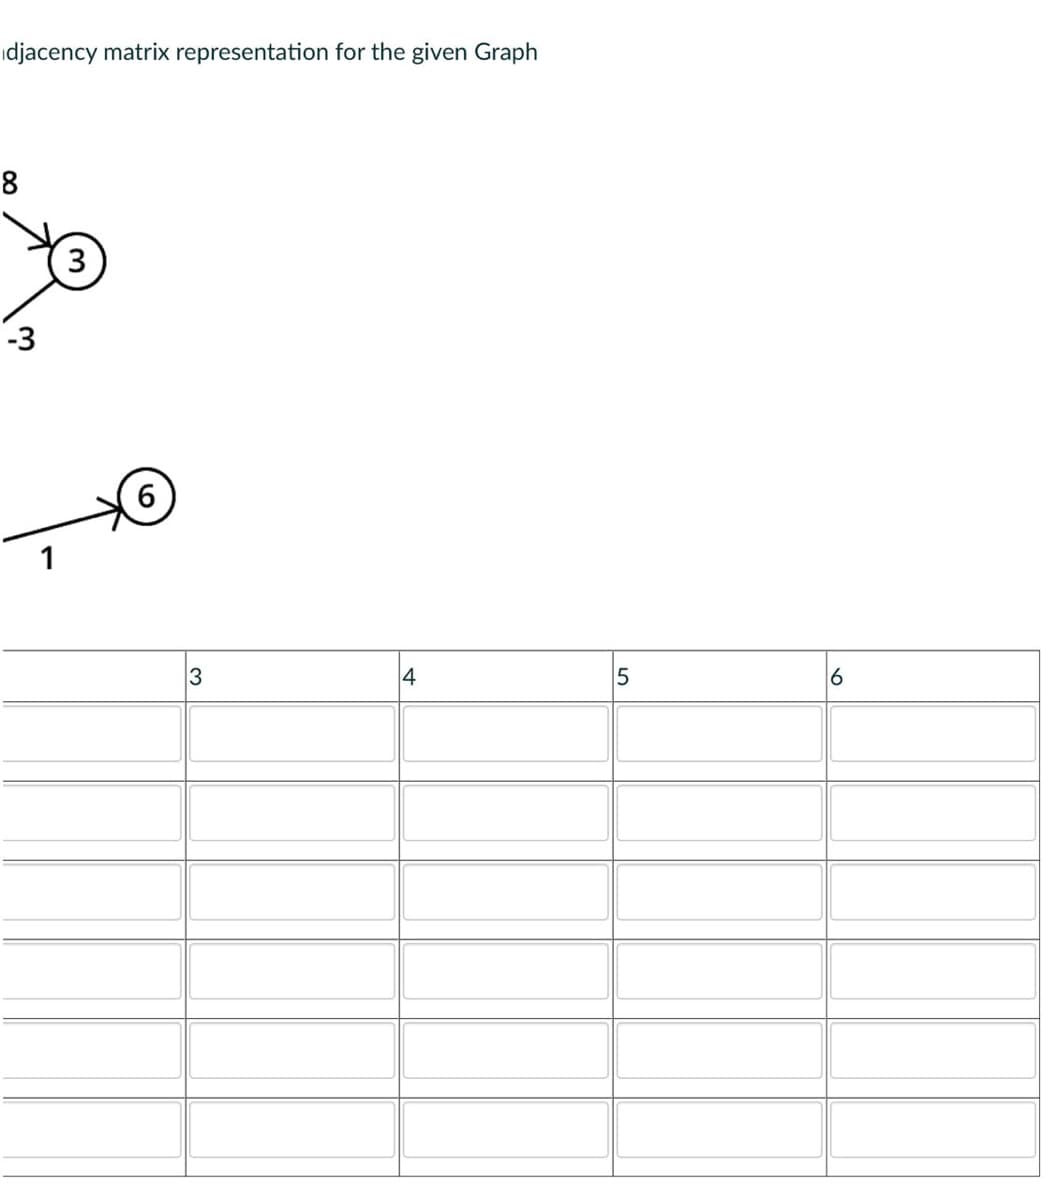 djacency matrix representation for the given Graph
8
-3
3
4
5
6